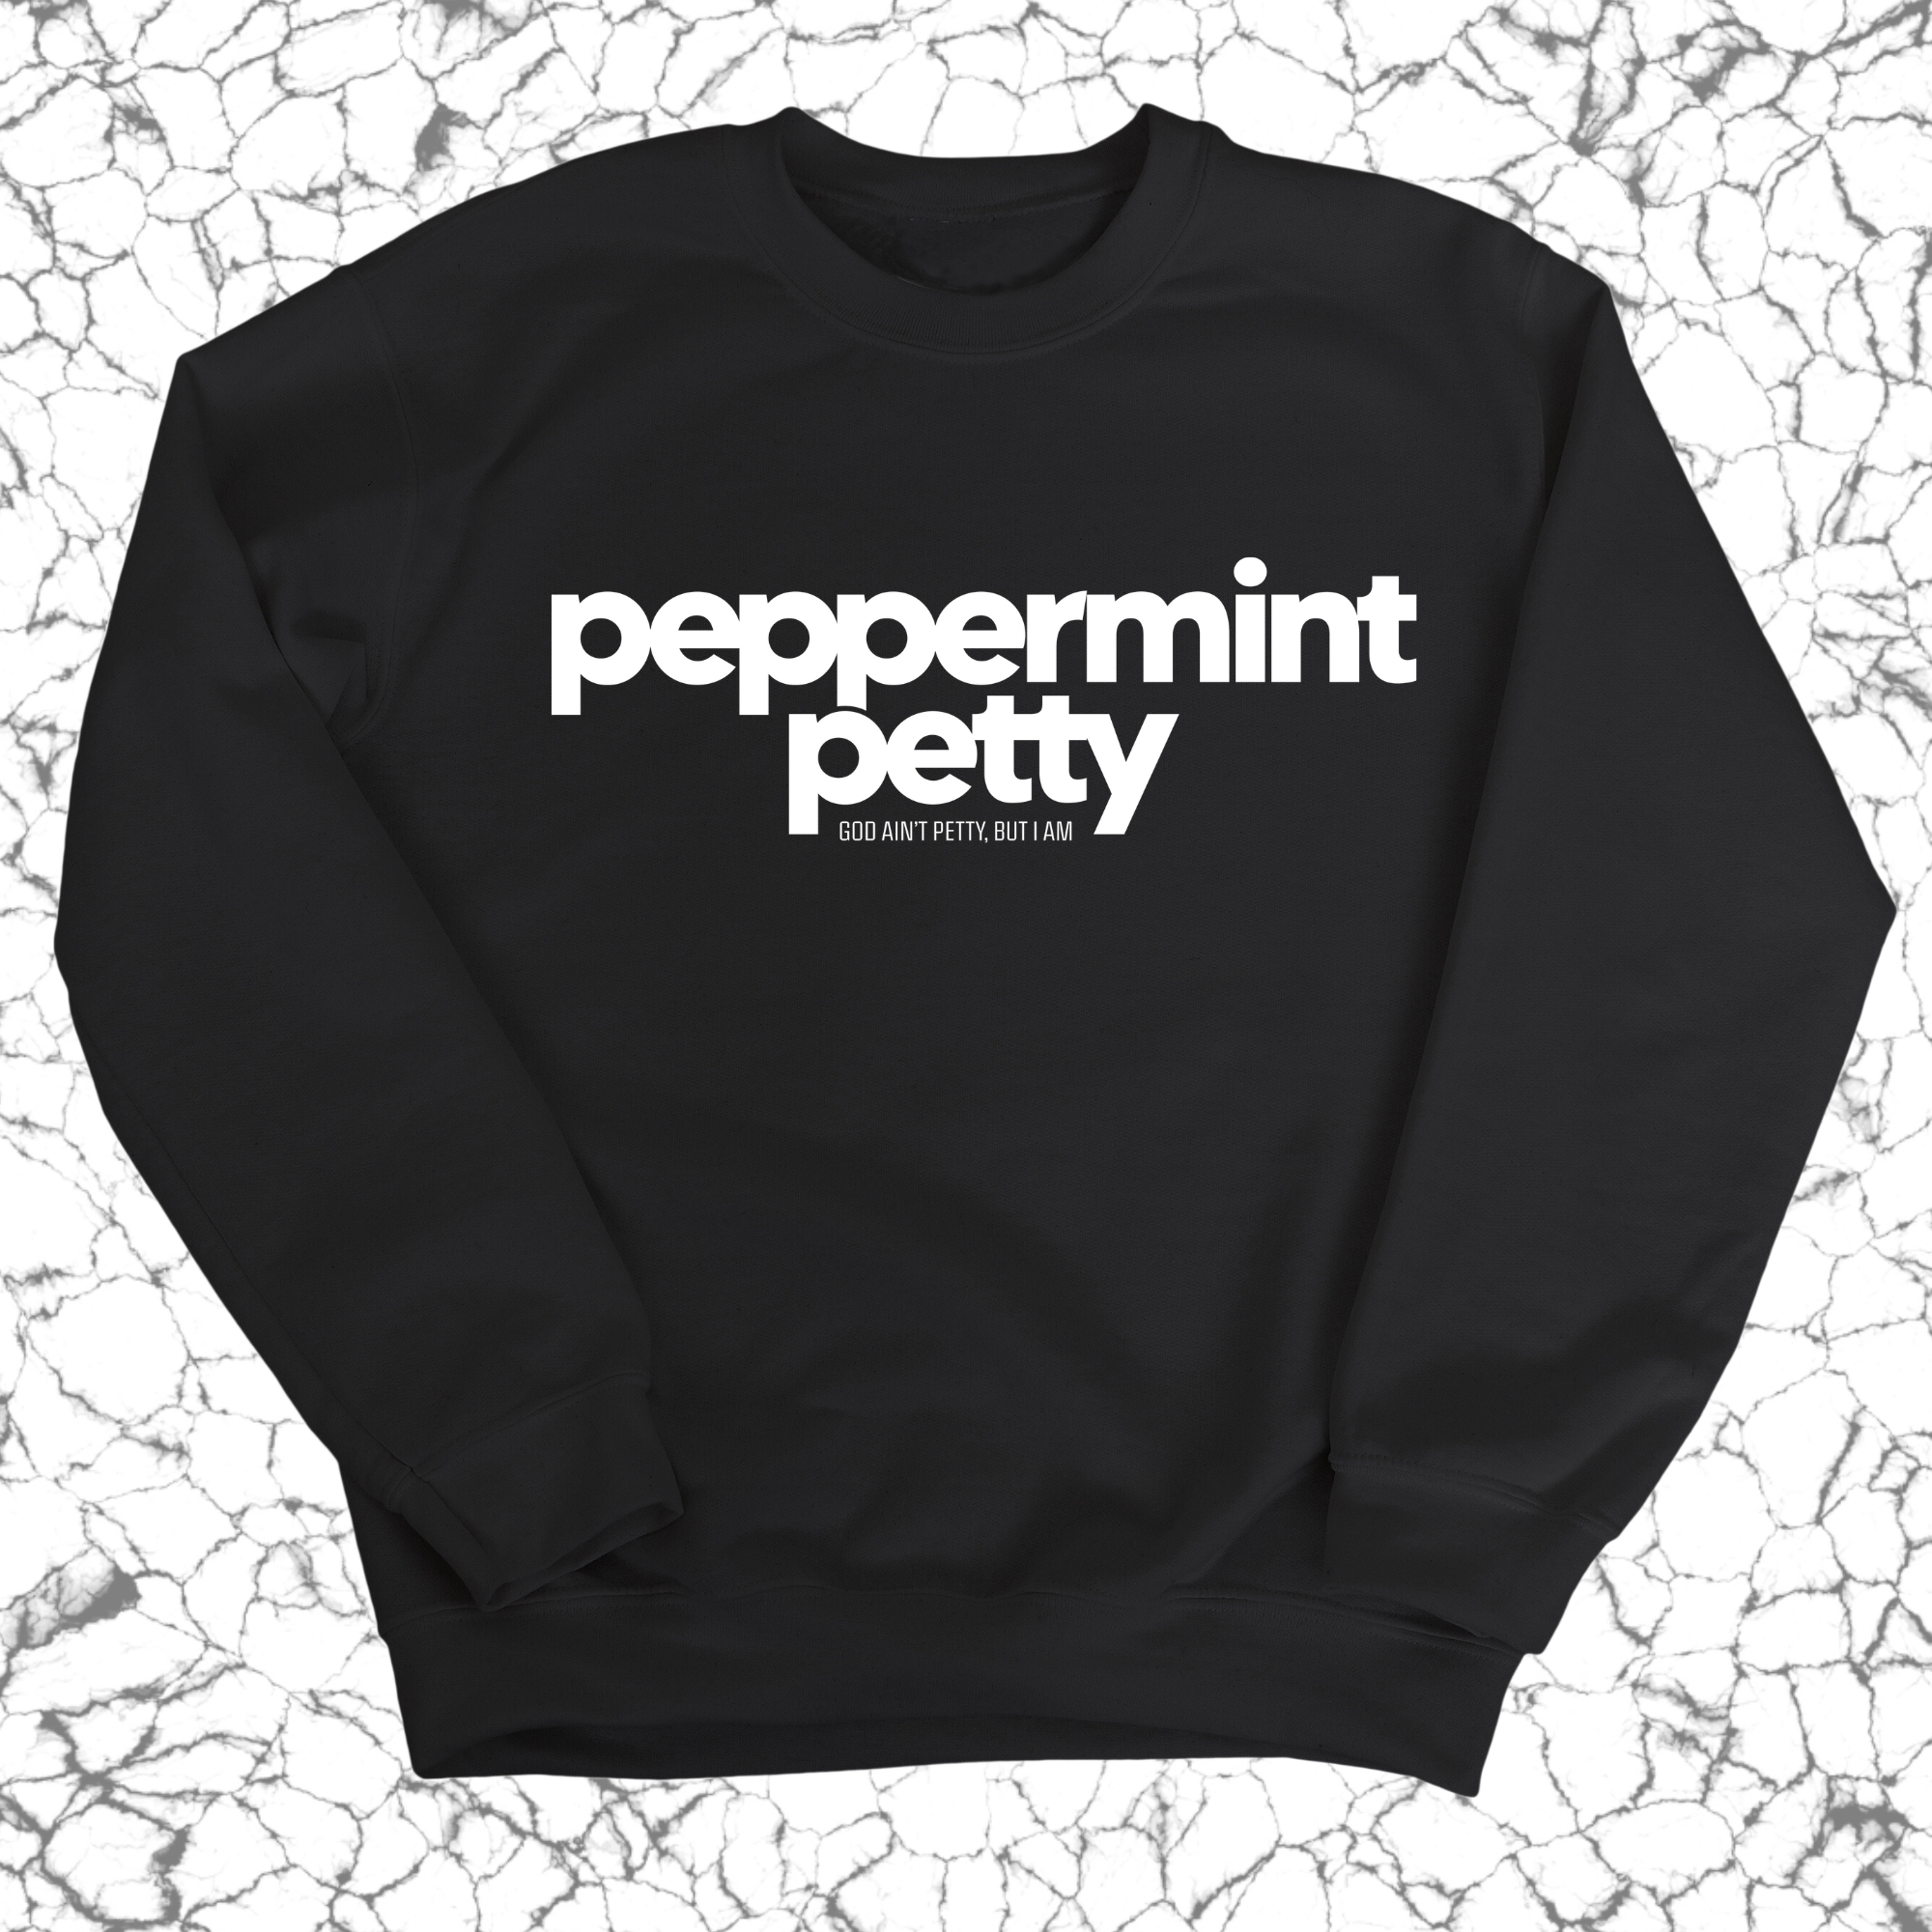 Peppermint Petty Unisex Sweatshirt-Sweatshirt-The Original God Ain't Petty But I Am